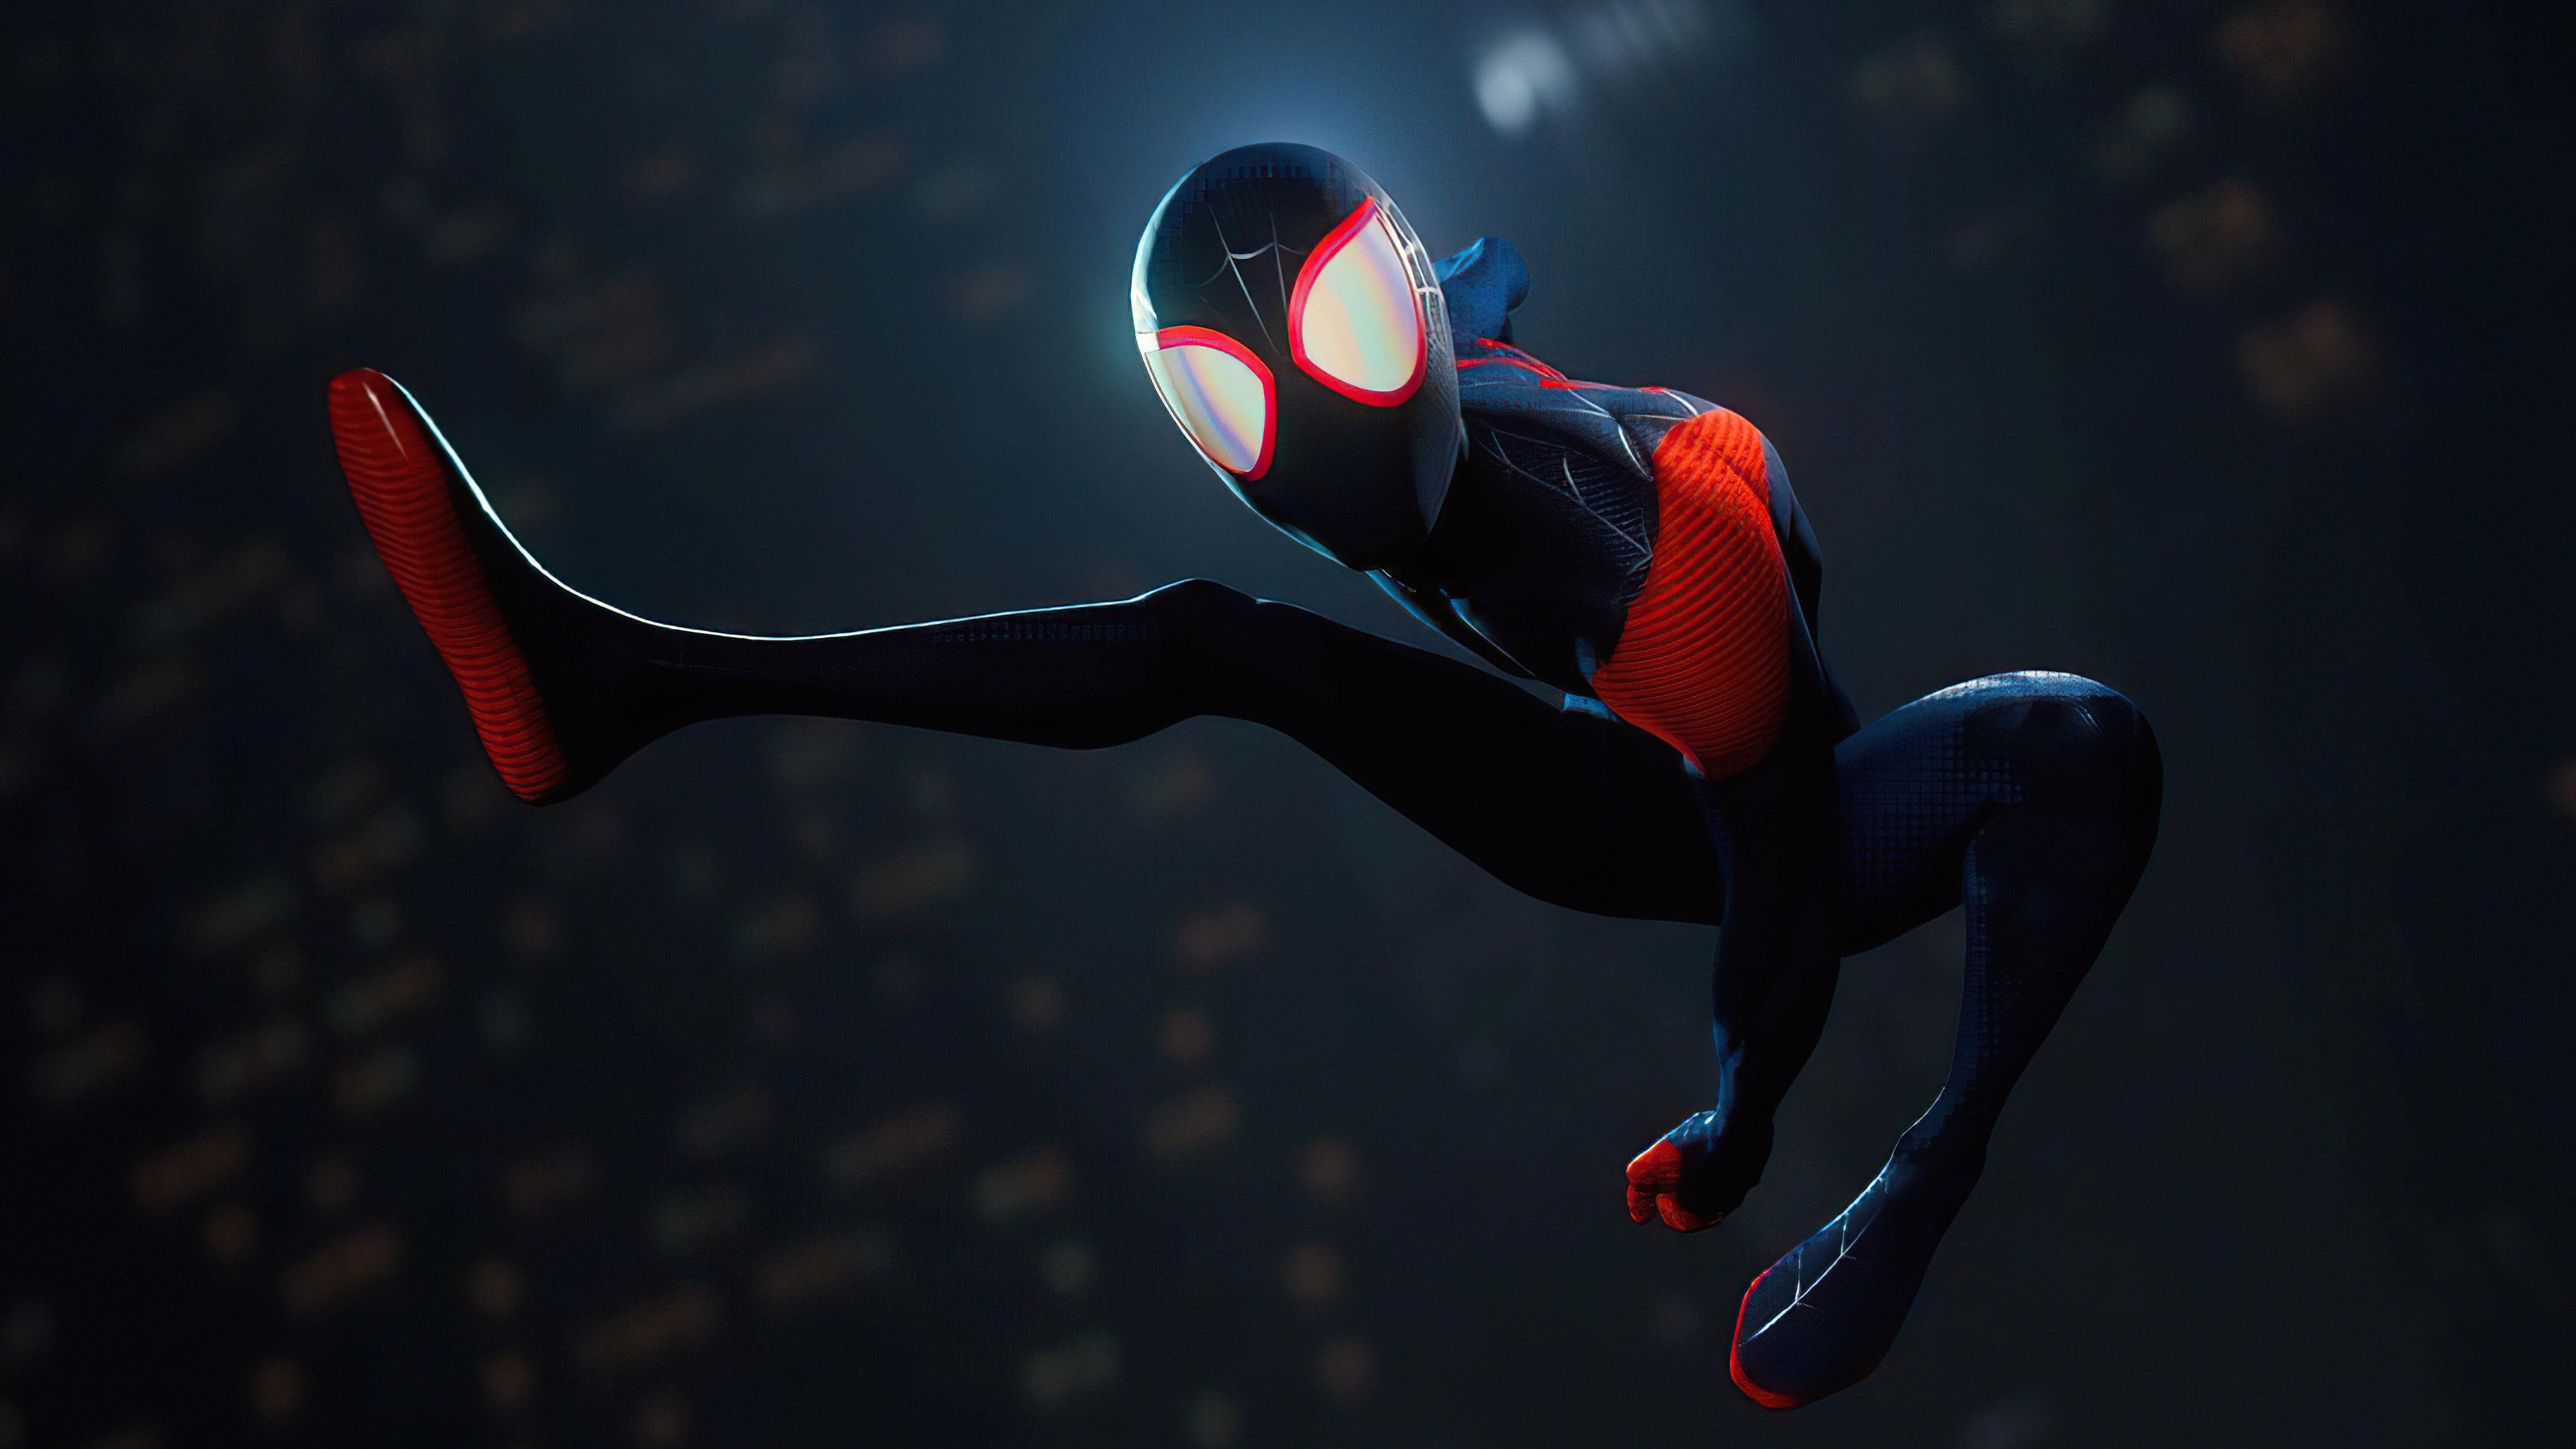 Spider Man black suit remastered Wallpaper 5k Ultra HD ID:8766